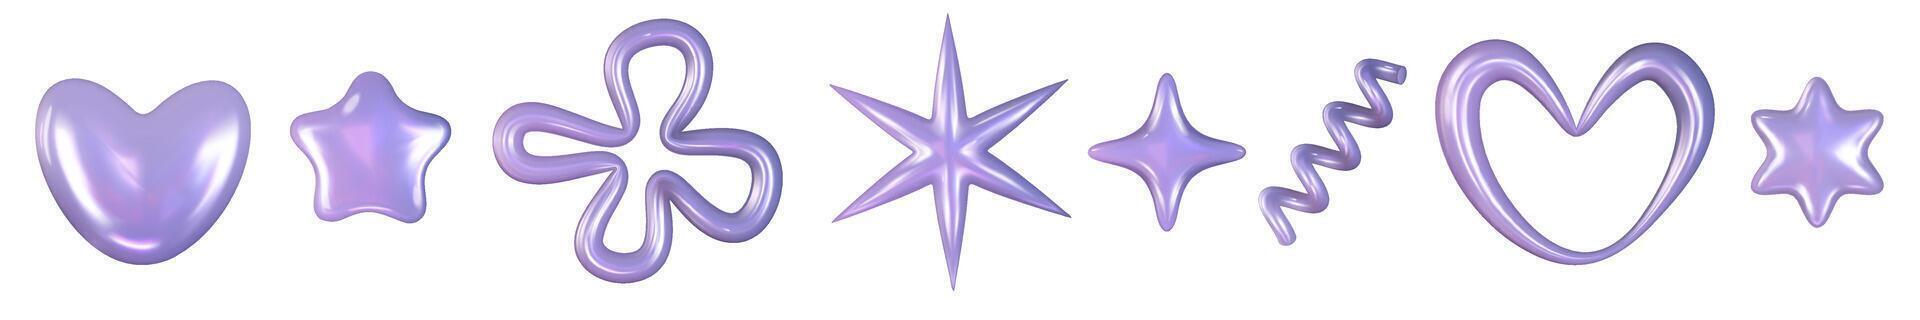 3d y2k Chrome holographic glossy element set. Abstract shape chrome metal render. Y2K form shiny purple holo light. illustration 3d render. vector